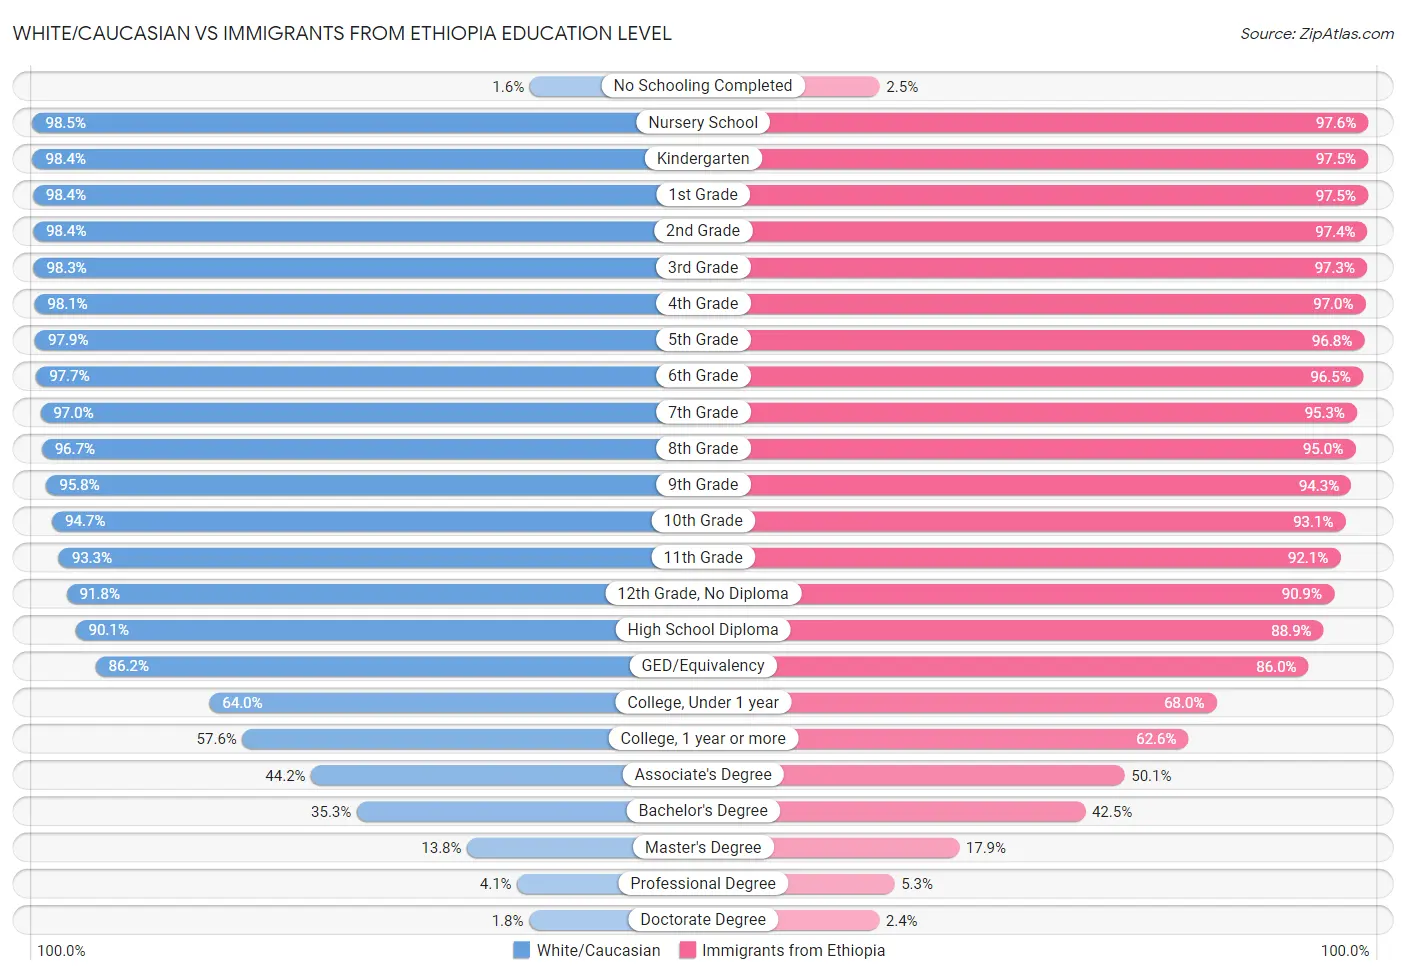 White/Caucasian vs Immigrants from Ethiopia Education Level